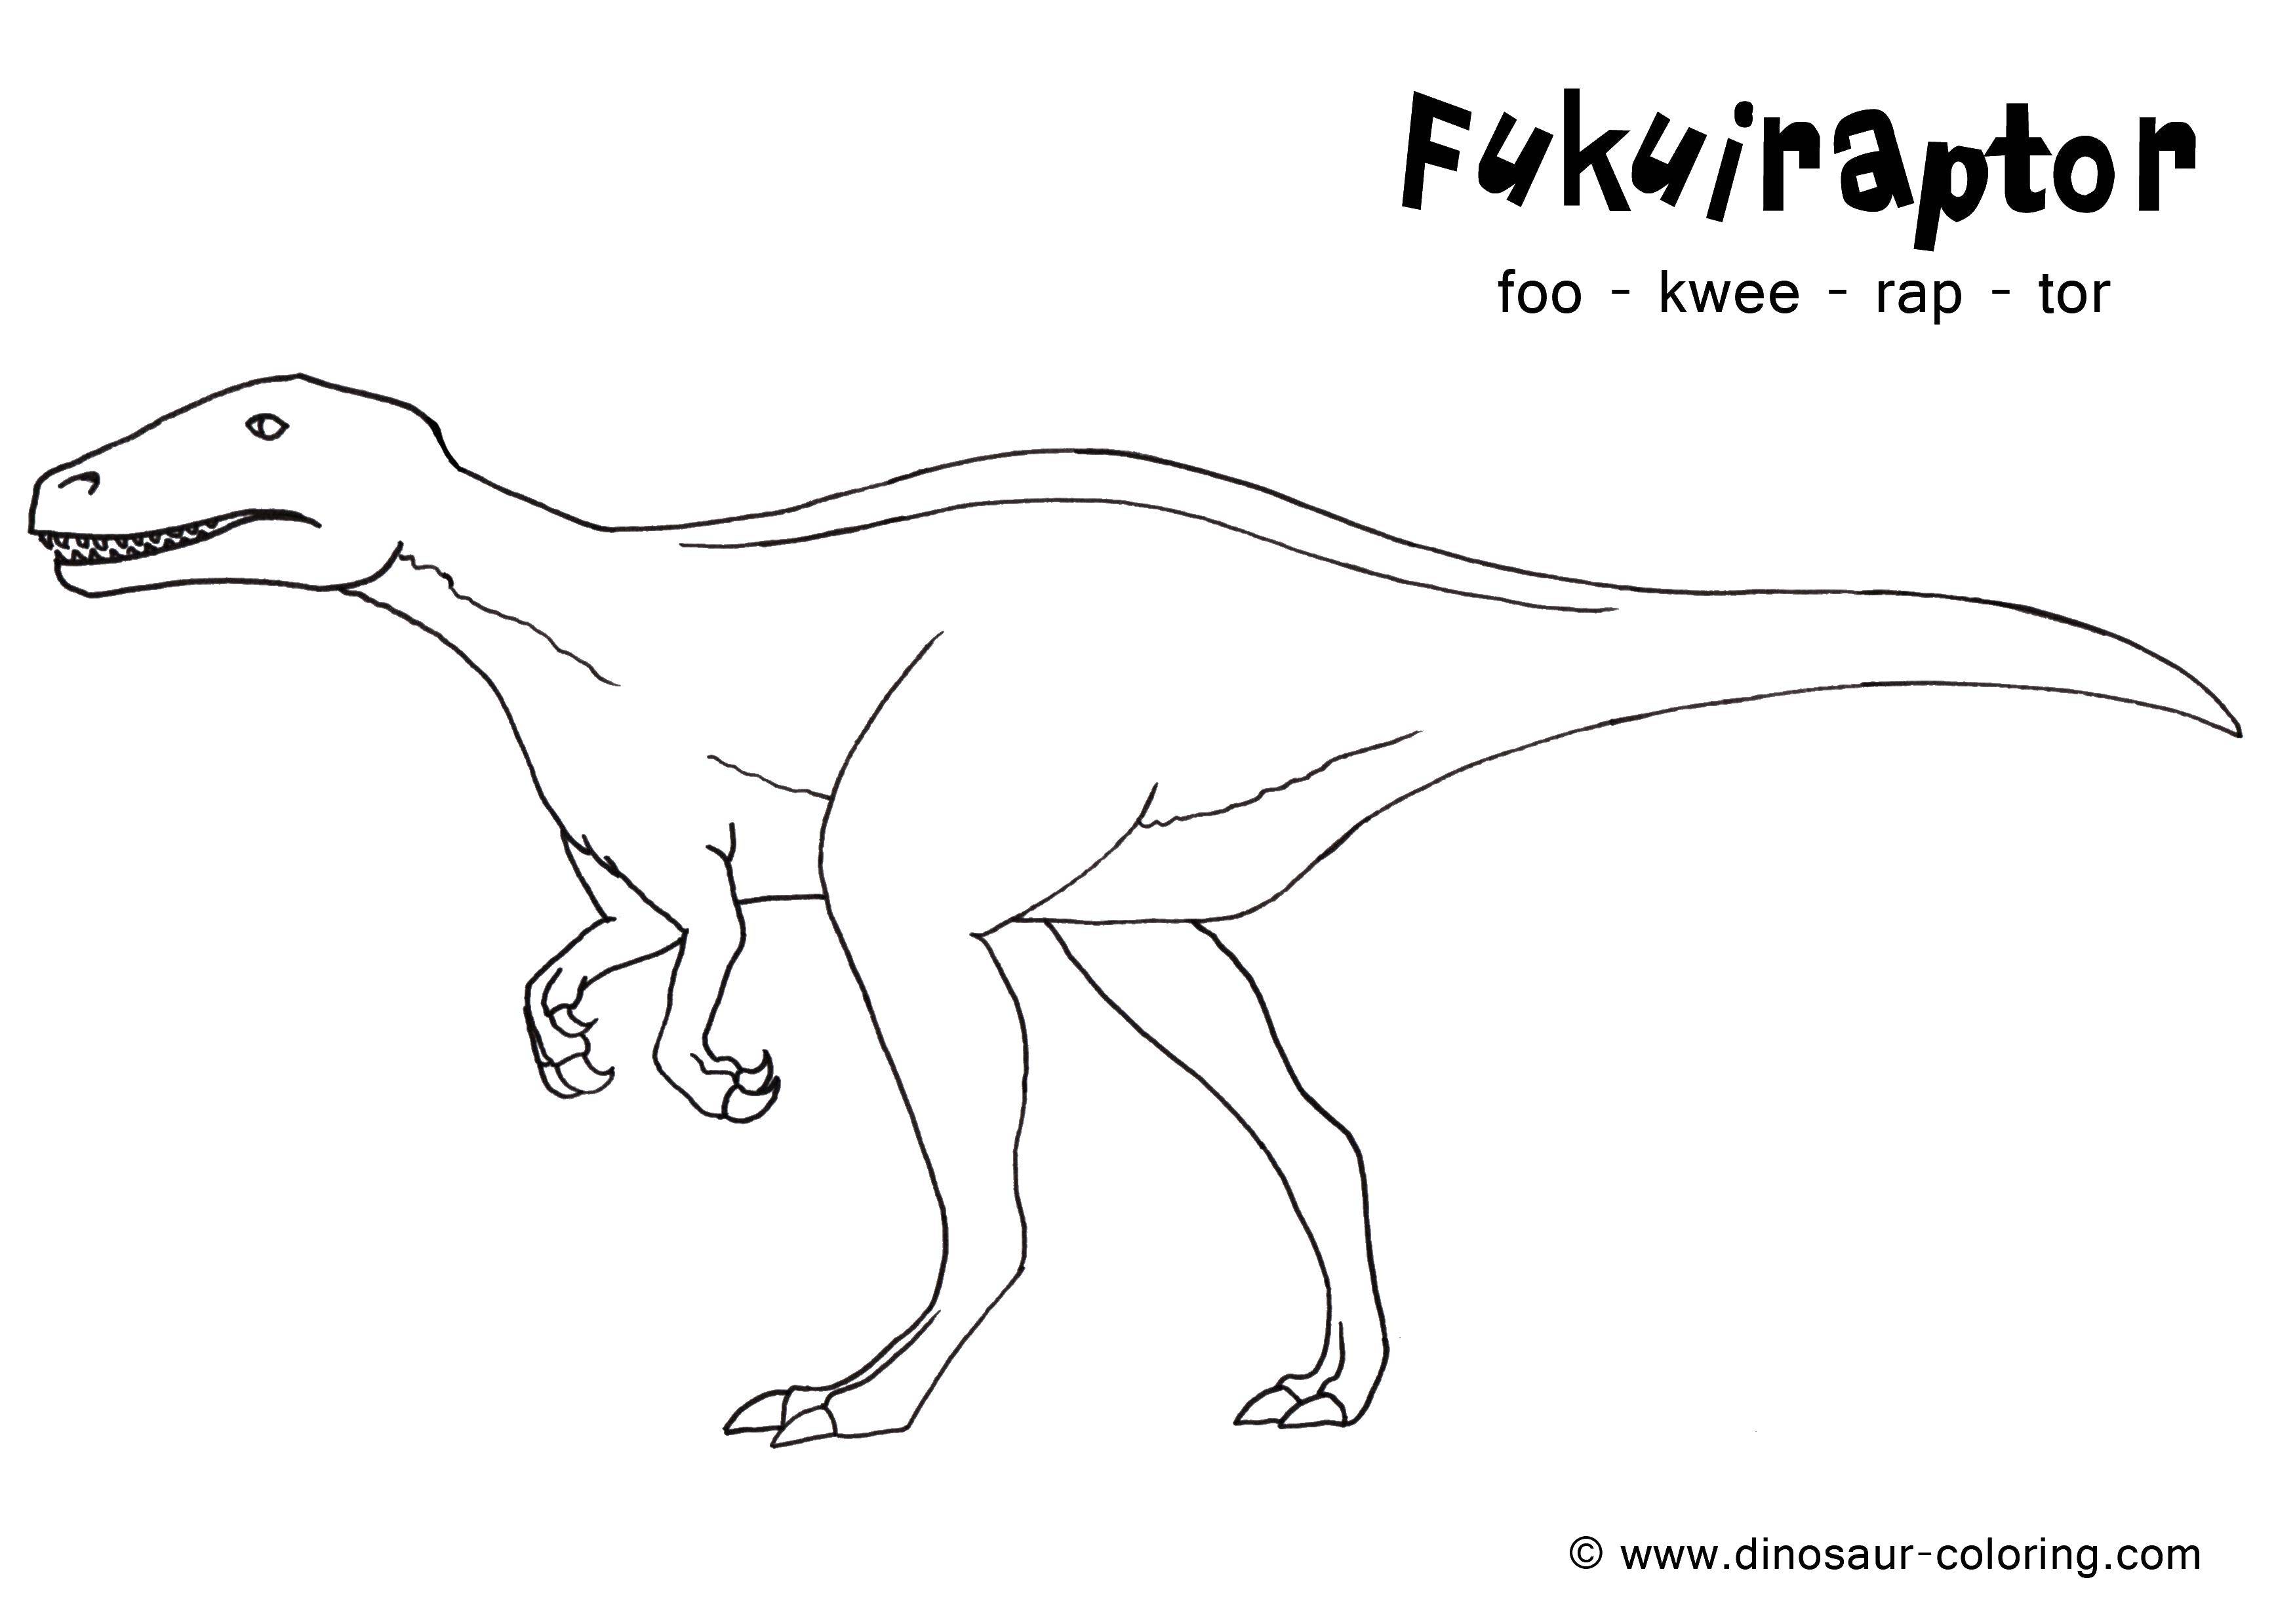 Coloring Focusator. Category dinosaur. Tags:  Shkuratov.